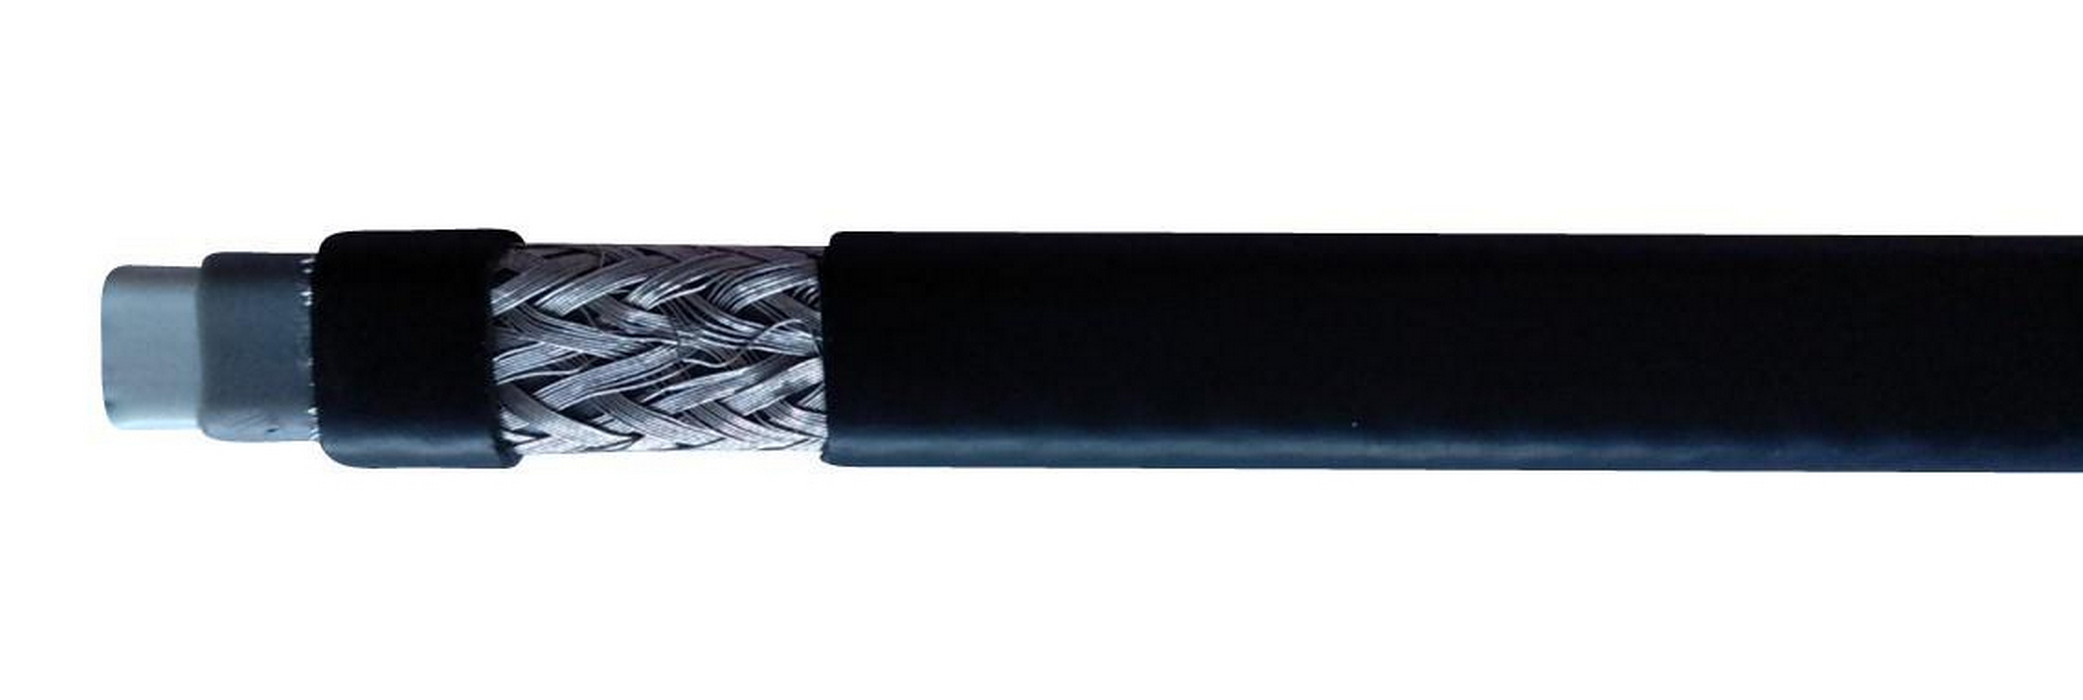 Саморегулирующийся кабель Ryxon LSR-17-CR (1 м.п.) цена 265.00 грн - фотография 2